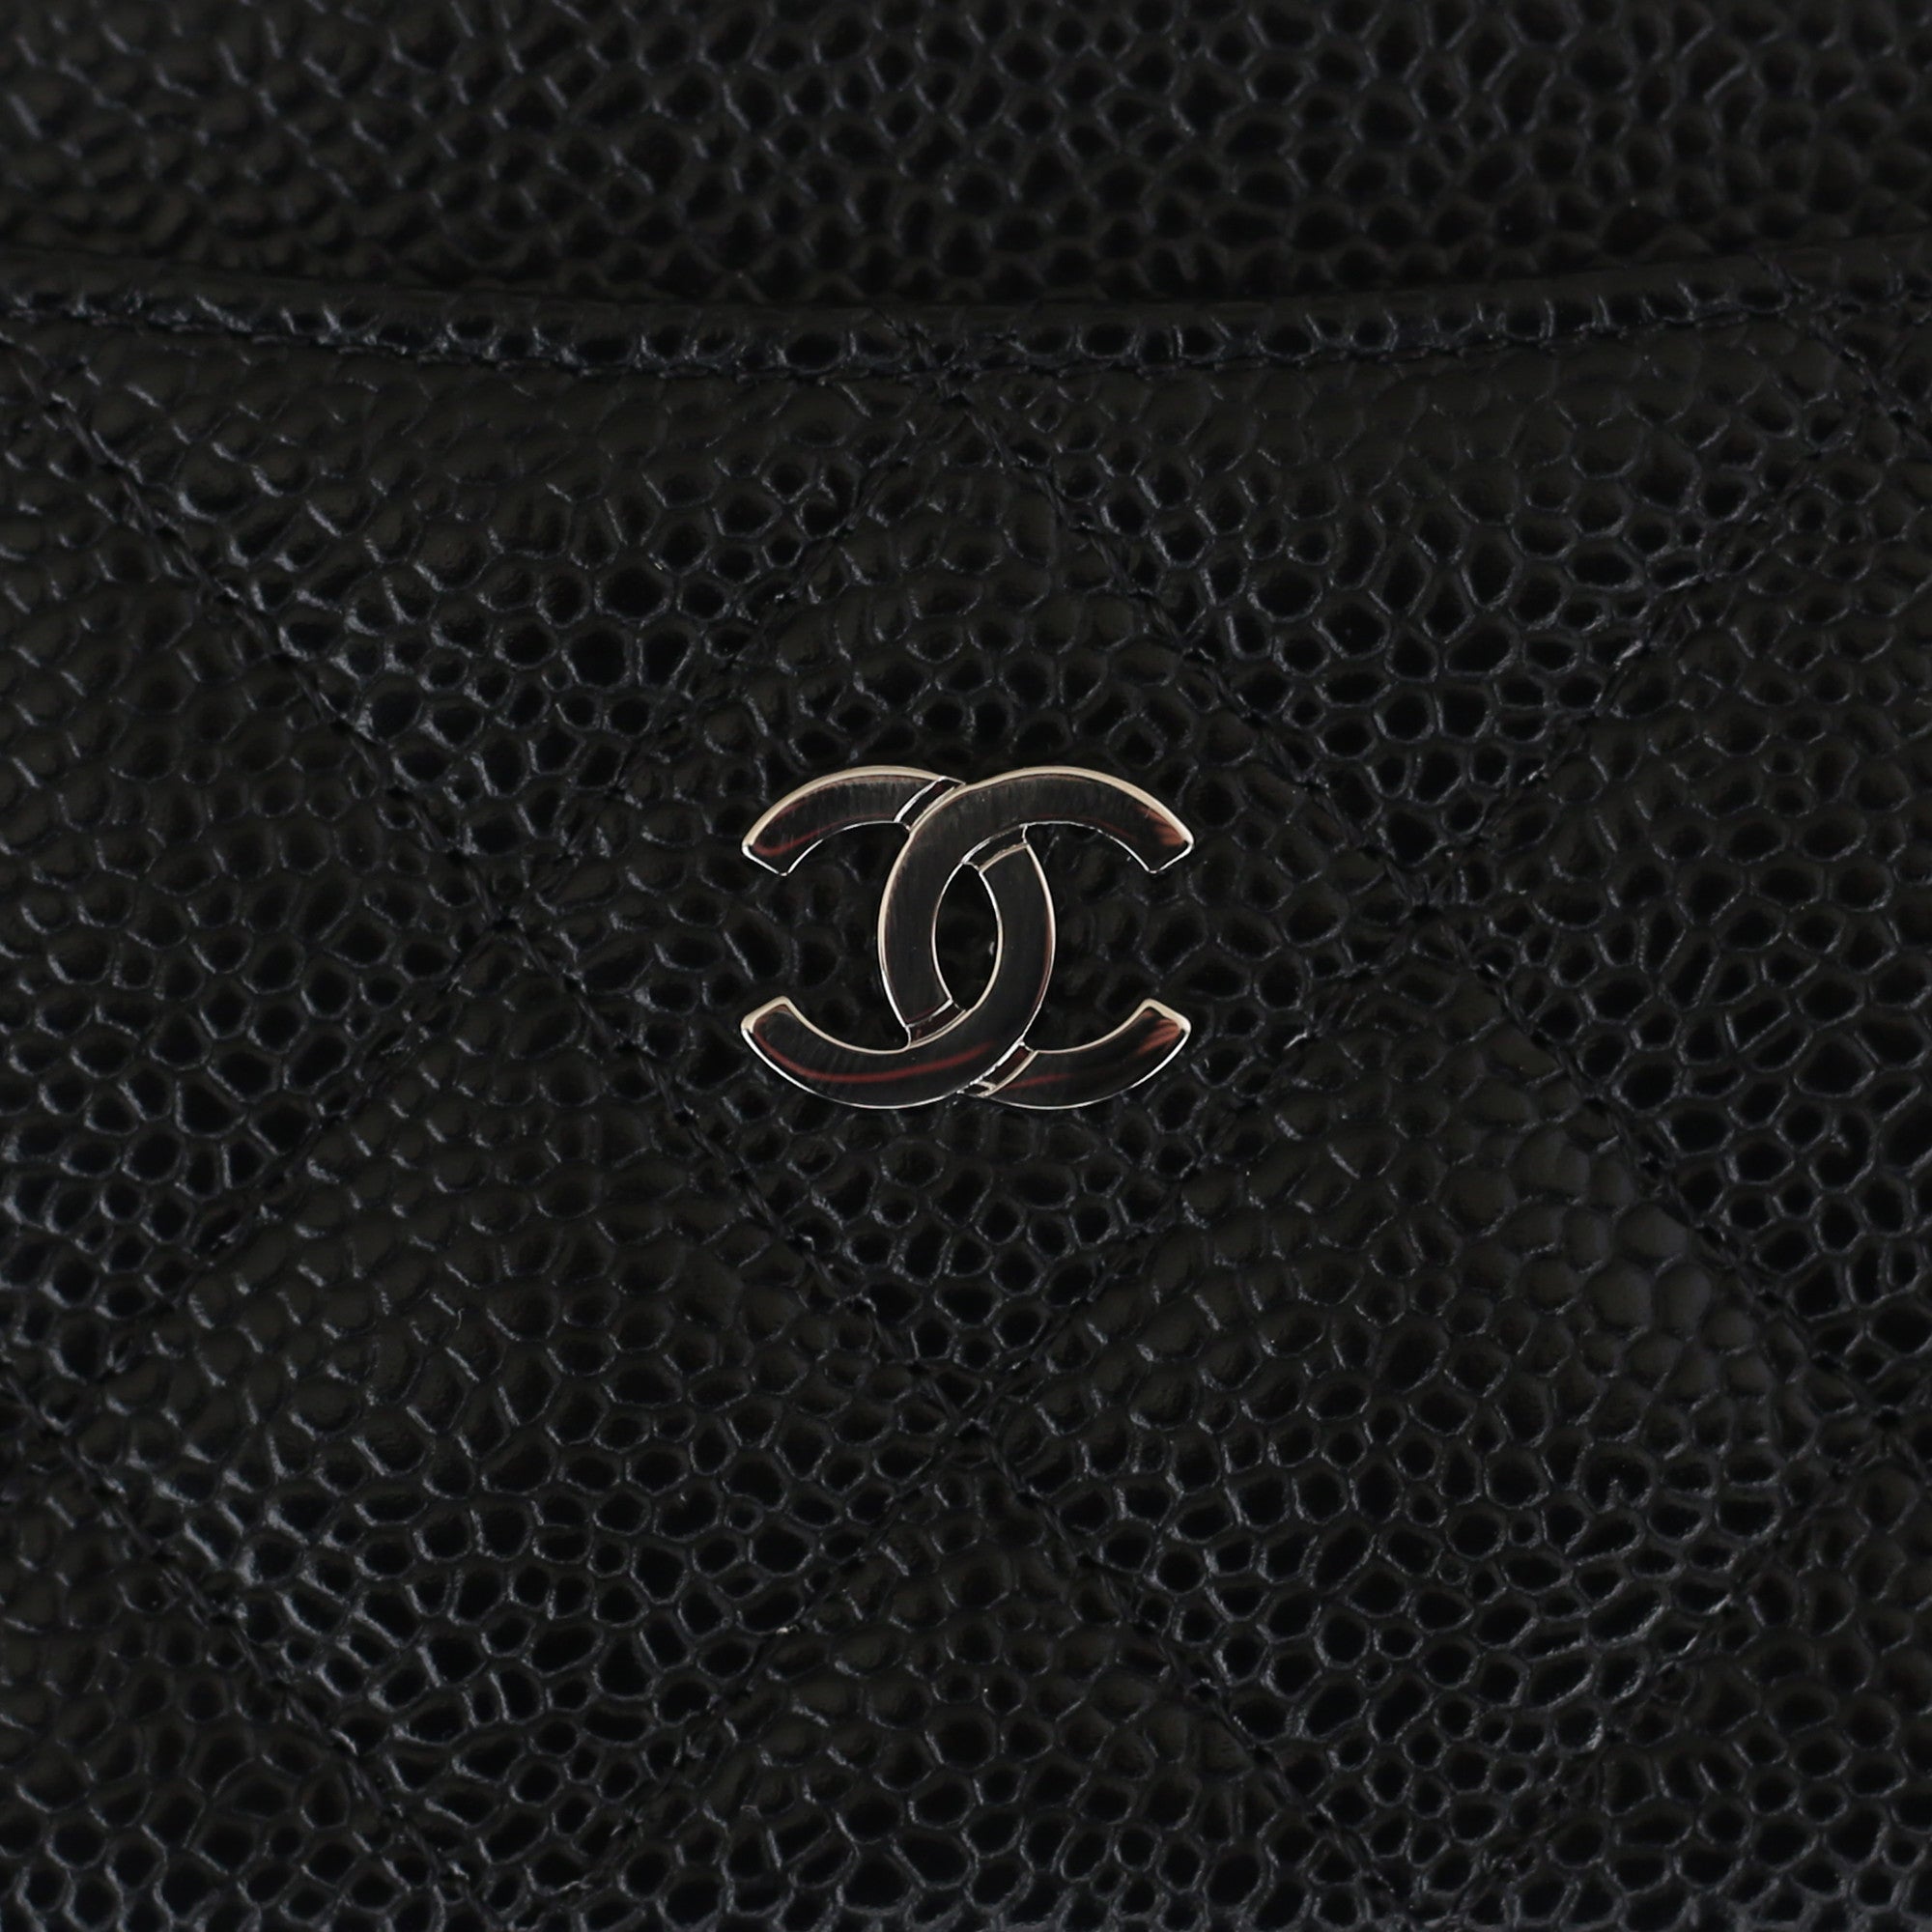 CHANEL, Bags, Chanel O Clutch Caviar Black Silver Hw Size S